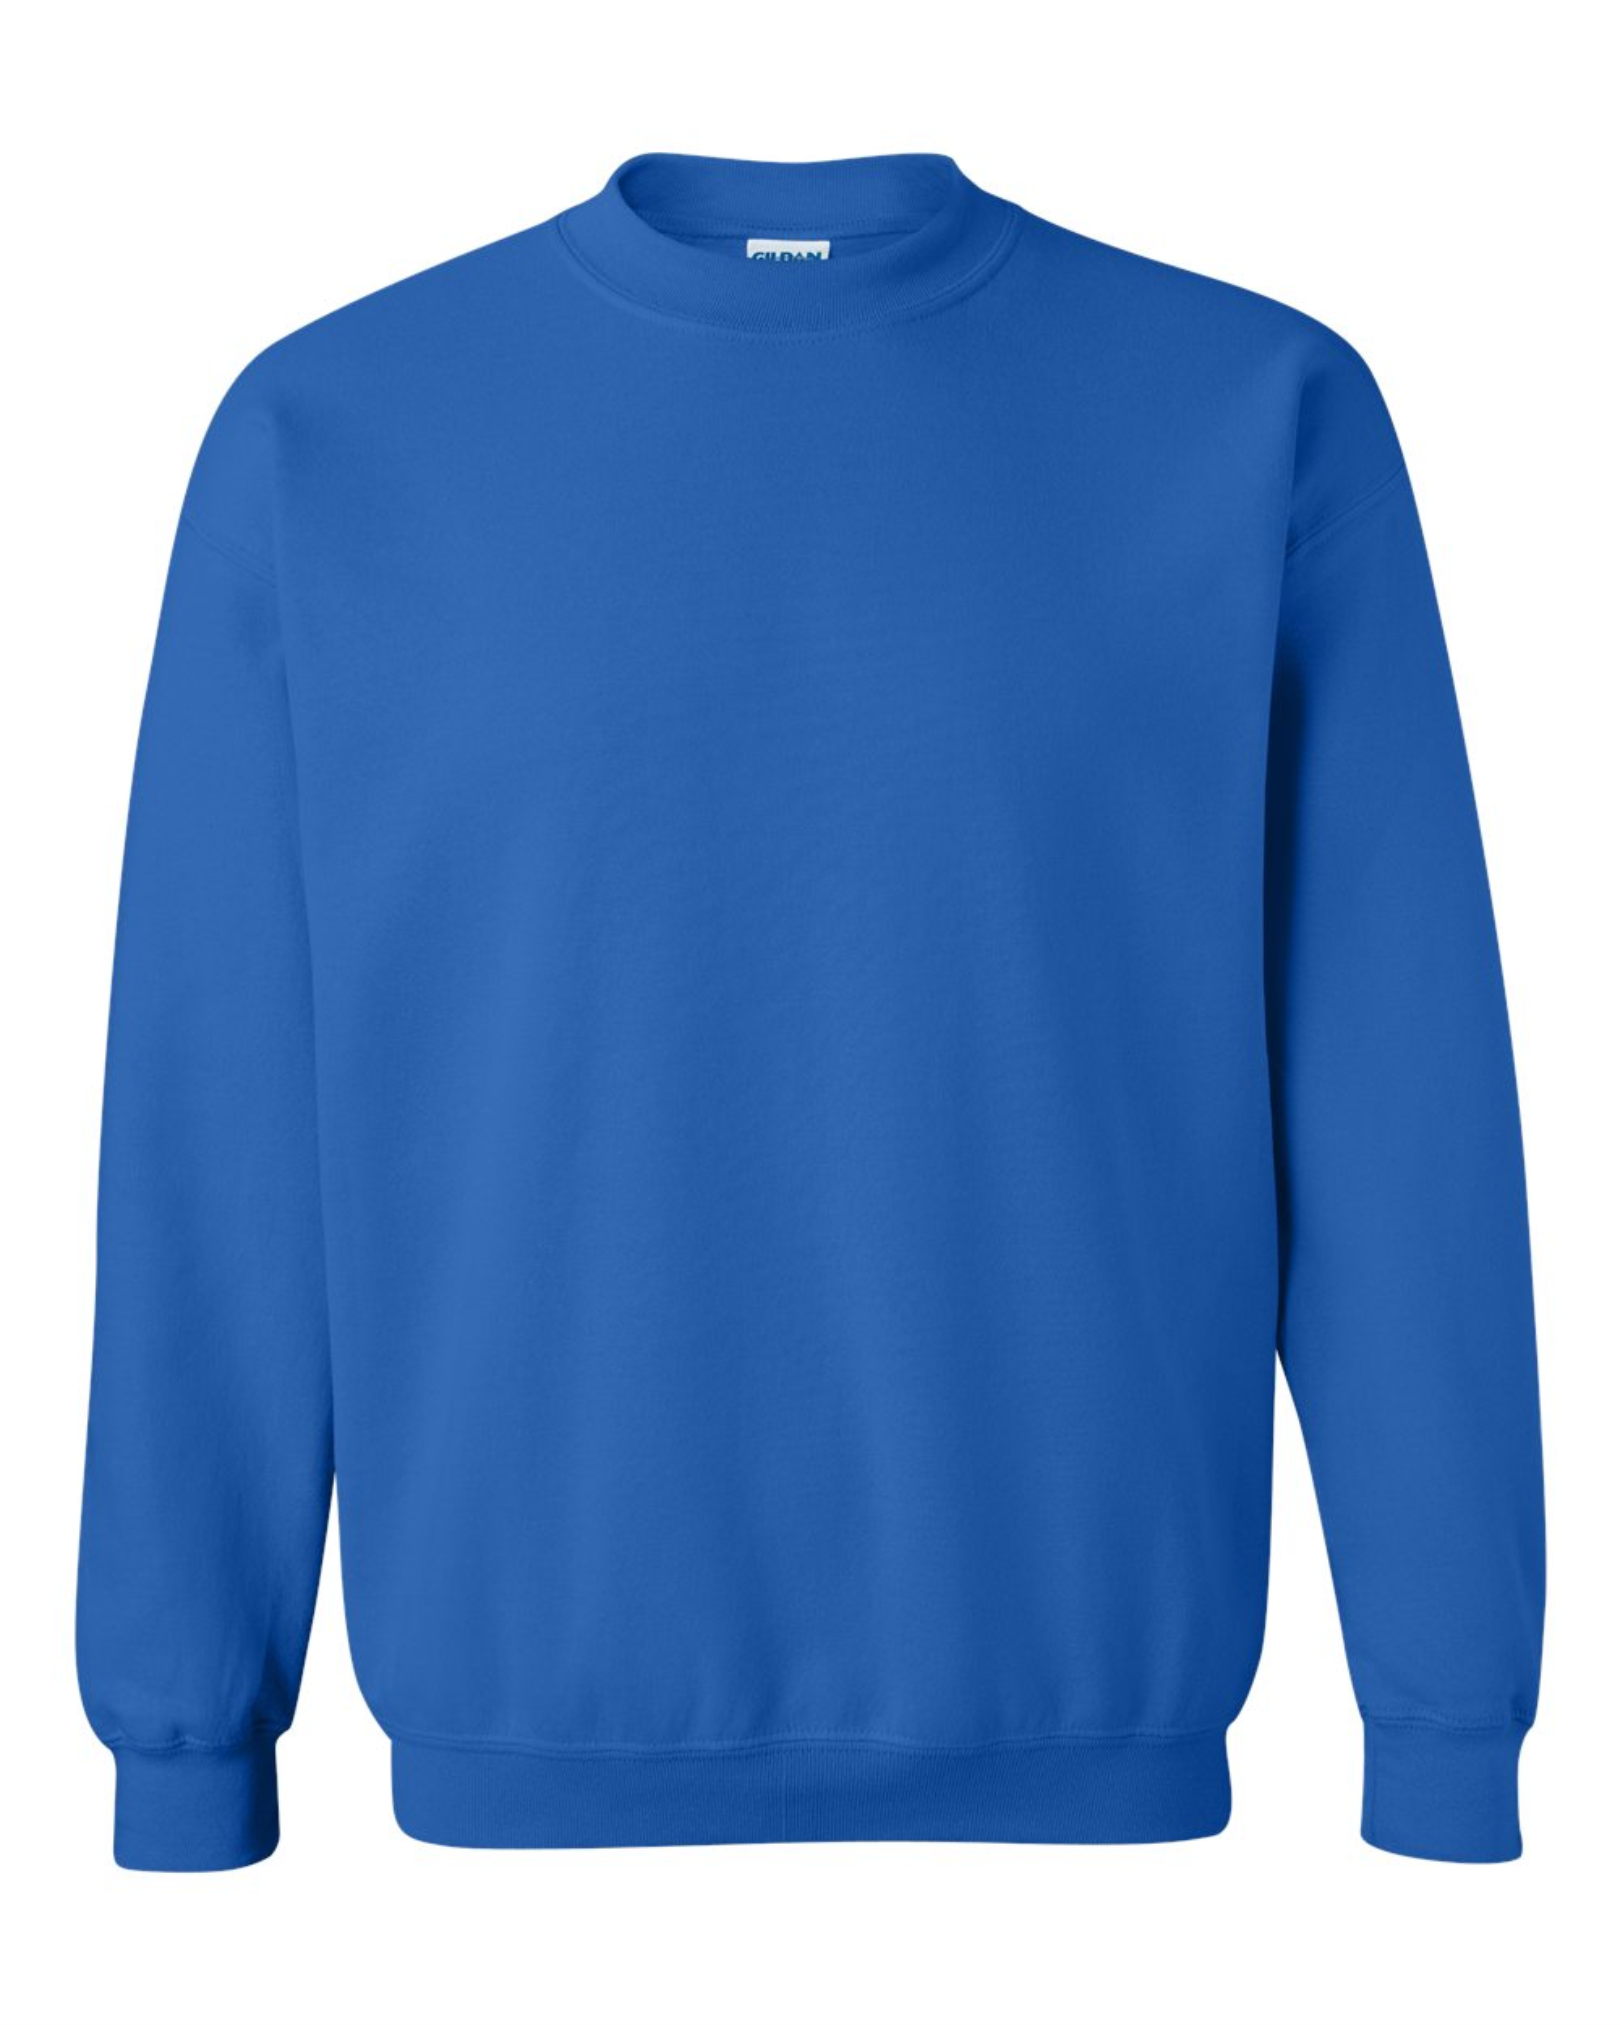 Adult Crewneck Sweatshirt - Cotton Royal